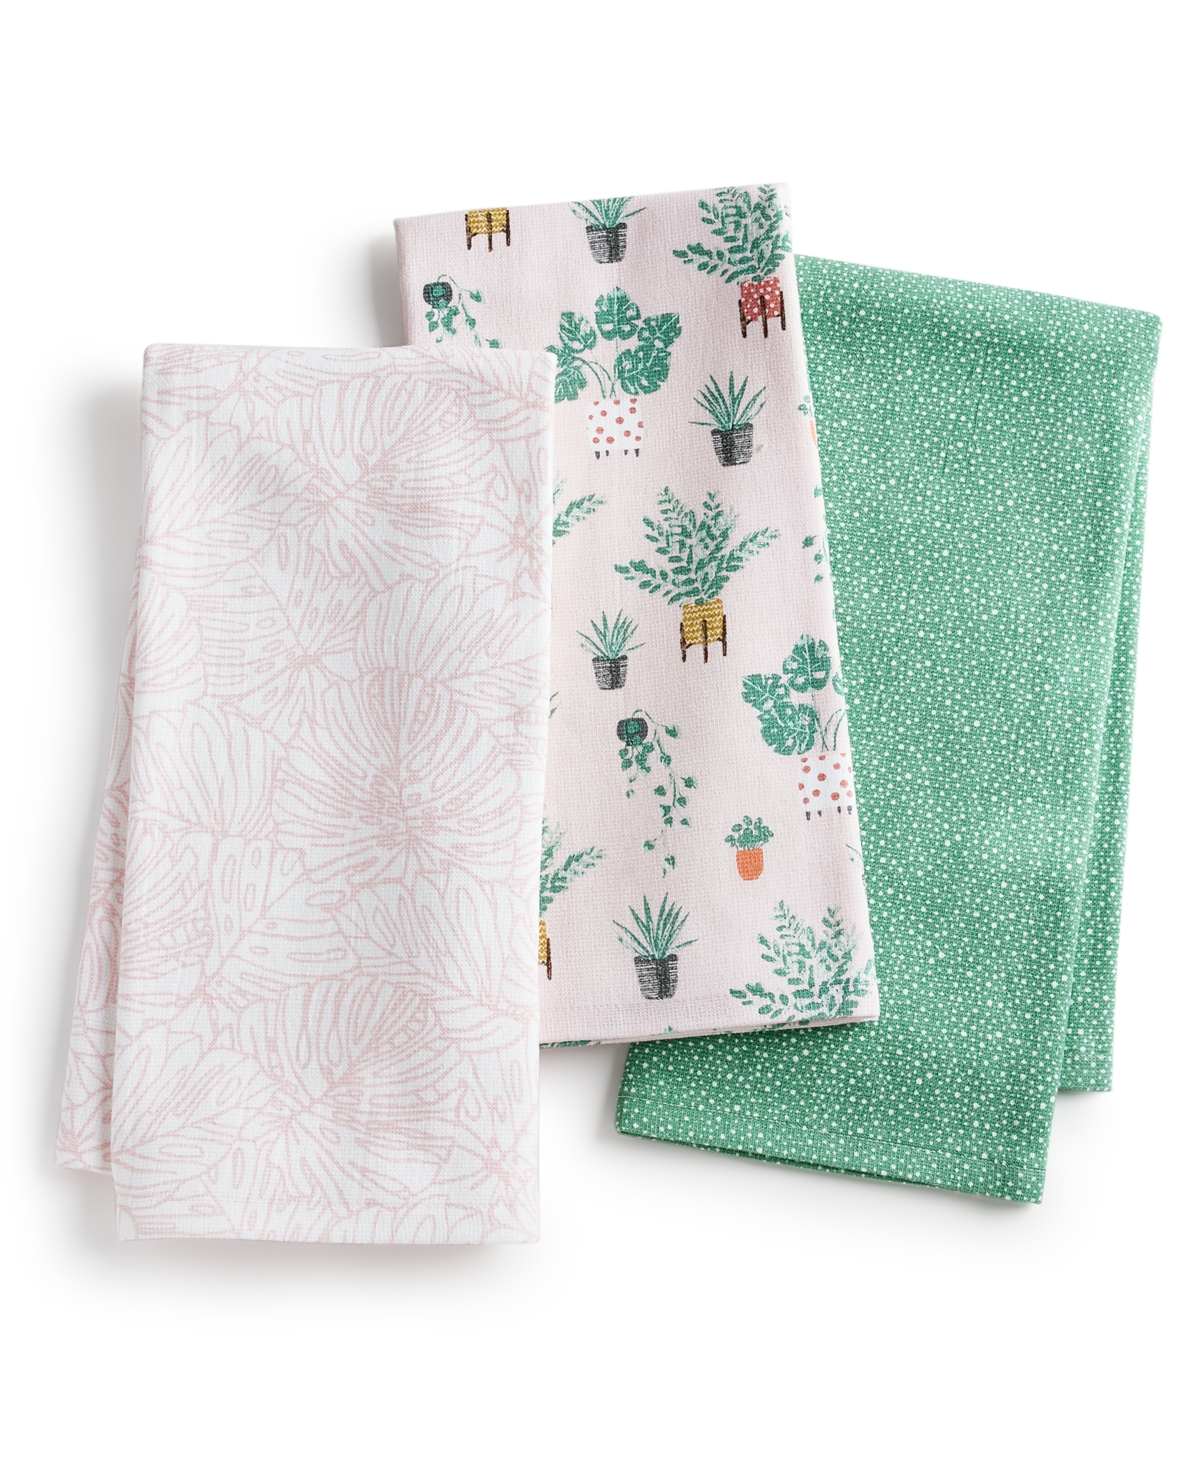 Fashion Plants 3-Pc. Towel Set, Created for Macy's